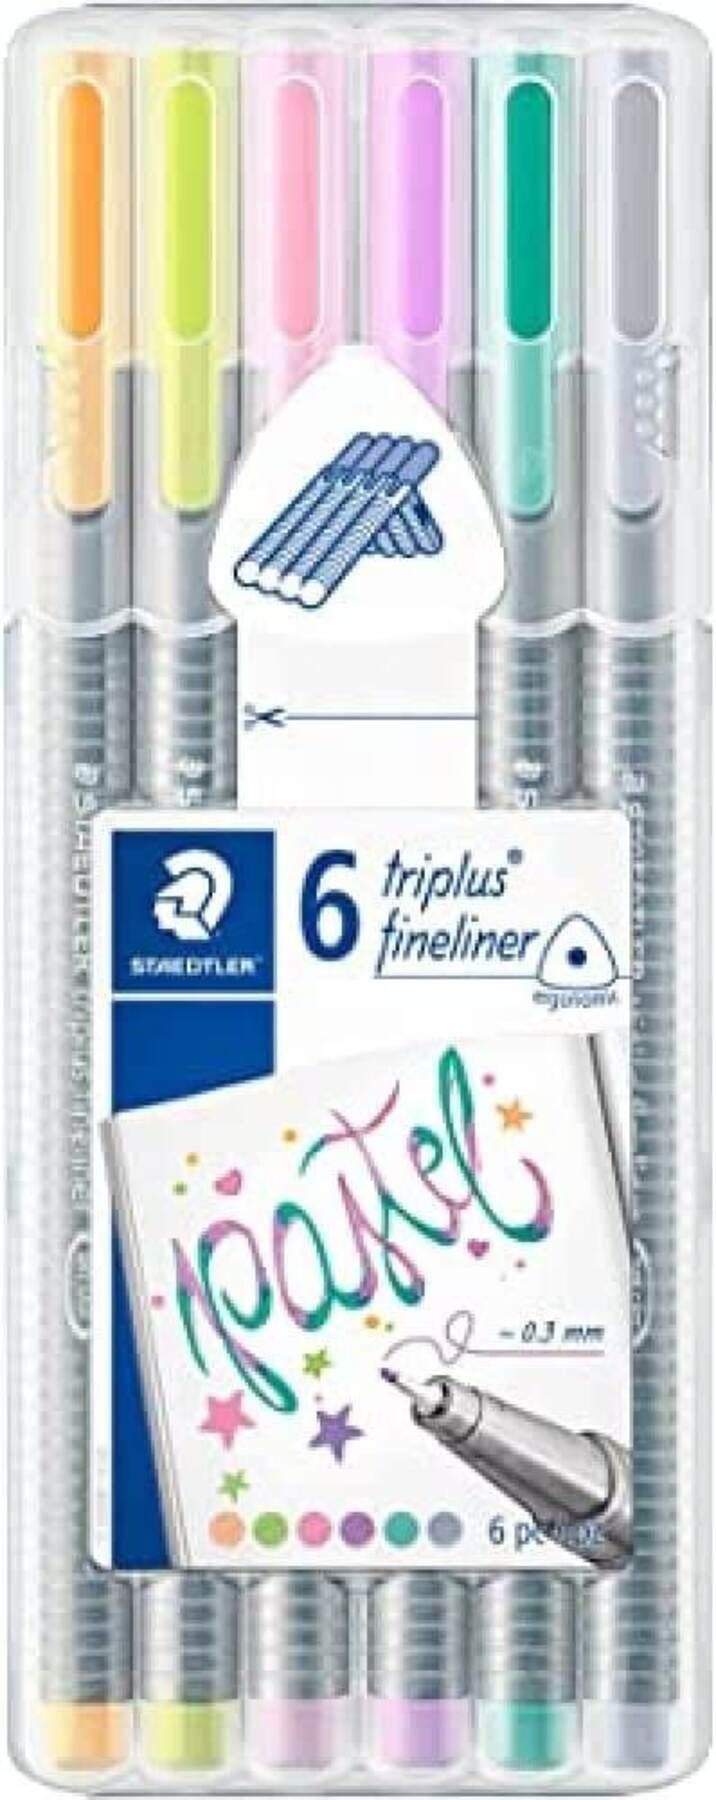 Staedtler Triplus 6'lı 0.3mm Üçgen Fineliner Pastel Kalem Seti / Sb6cs1